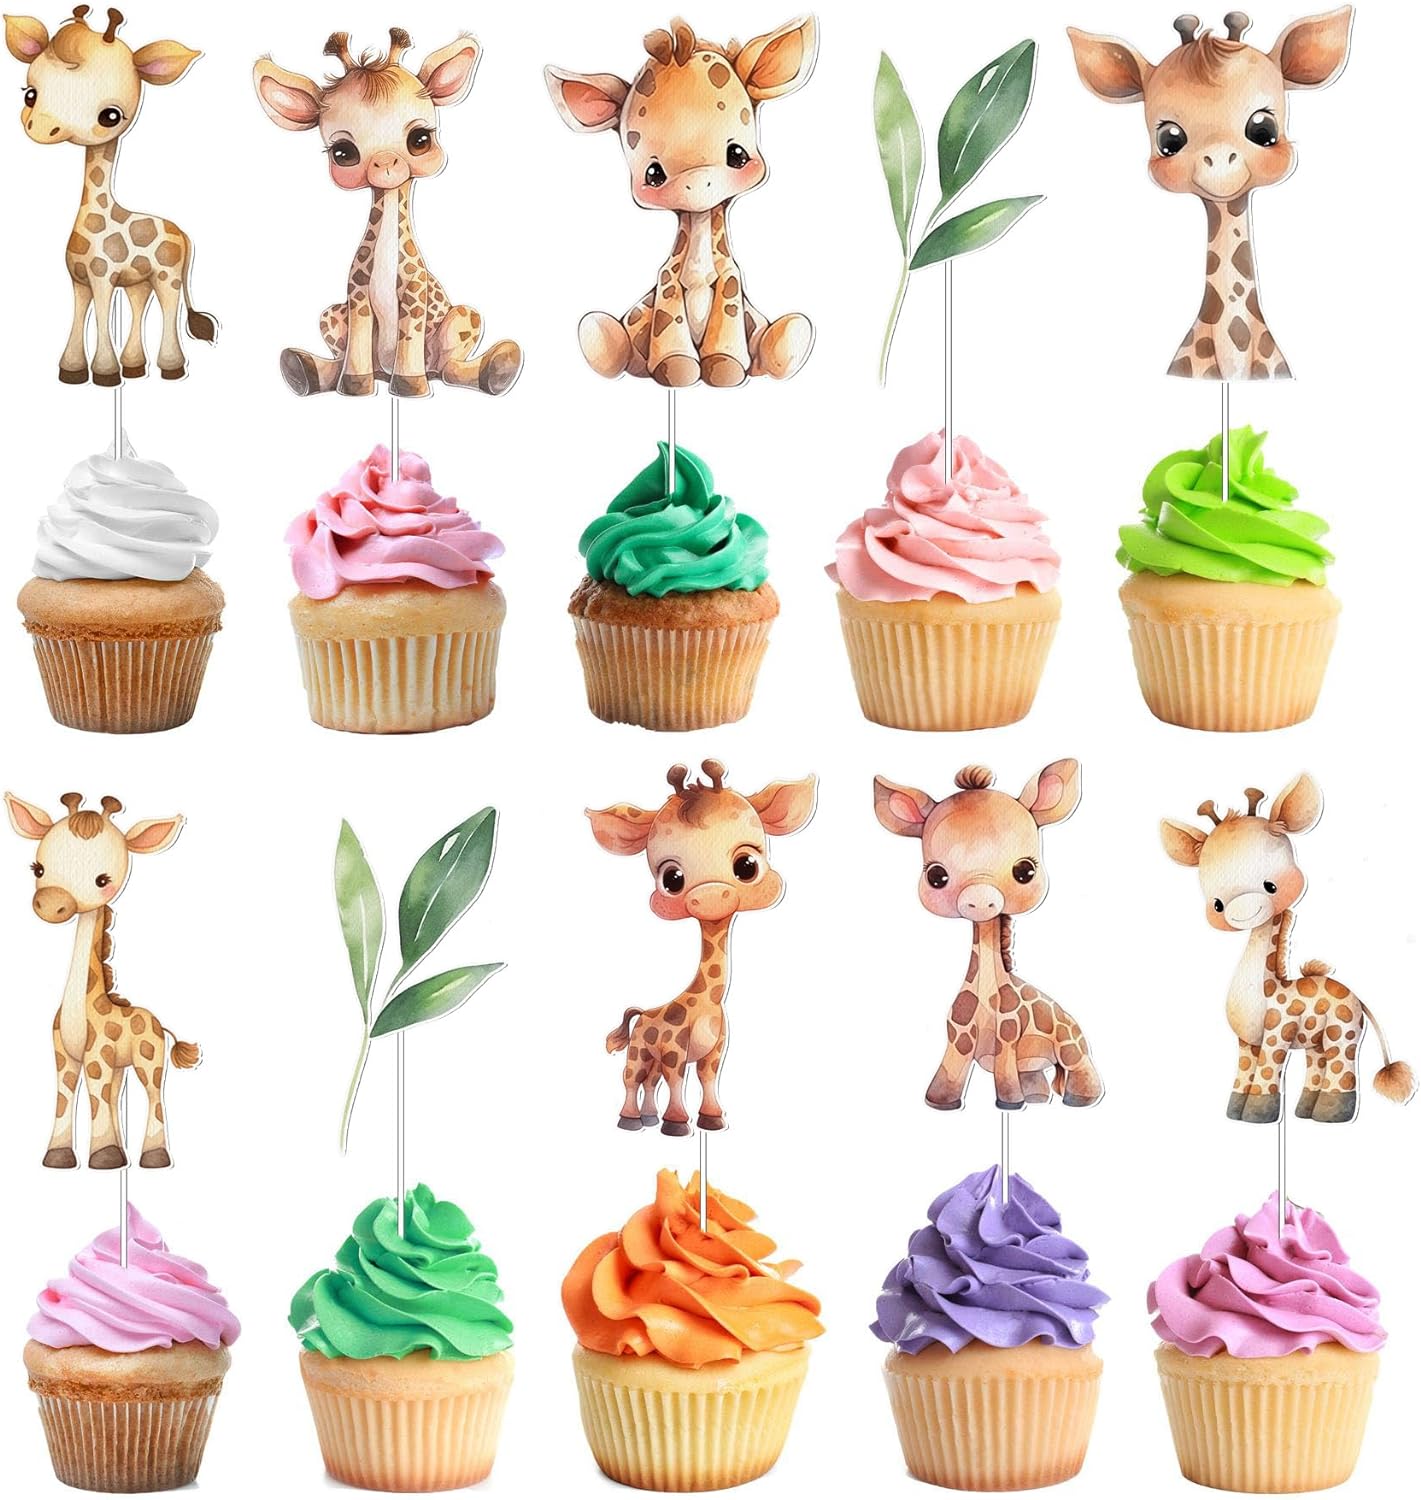 Sweet Safari Giraffe Cupcake Toppers - Set of 10 - Charming Jungle-Themed Cake Decorations